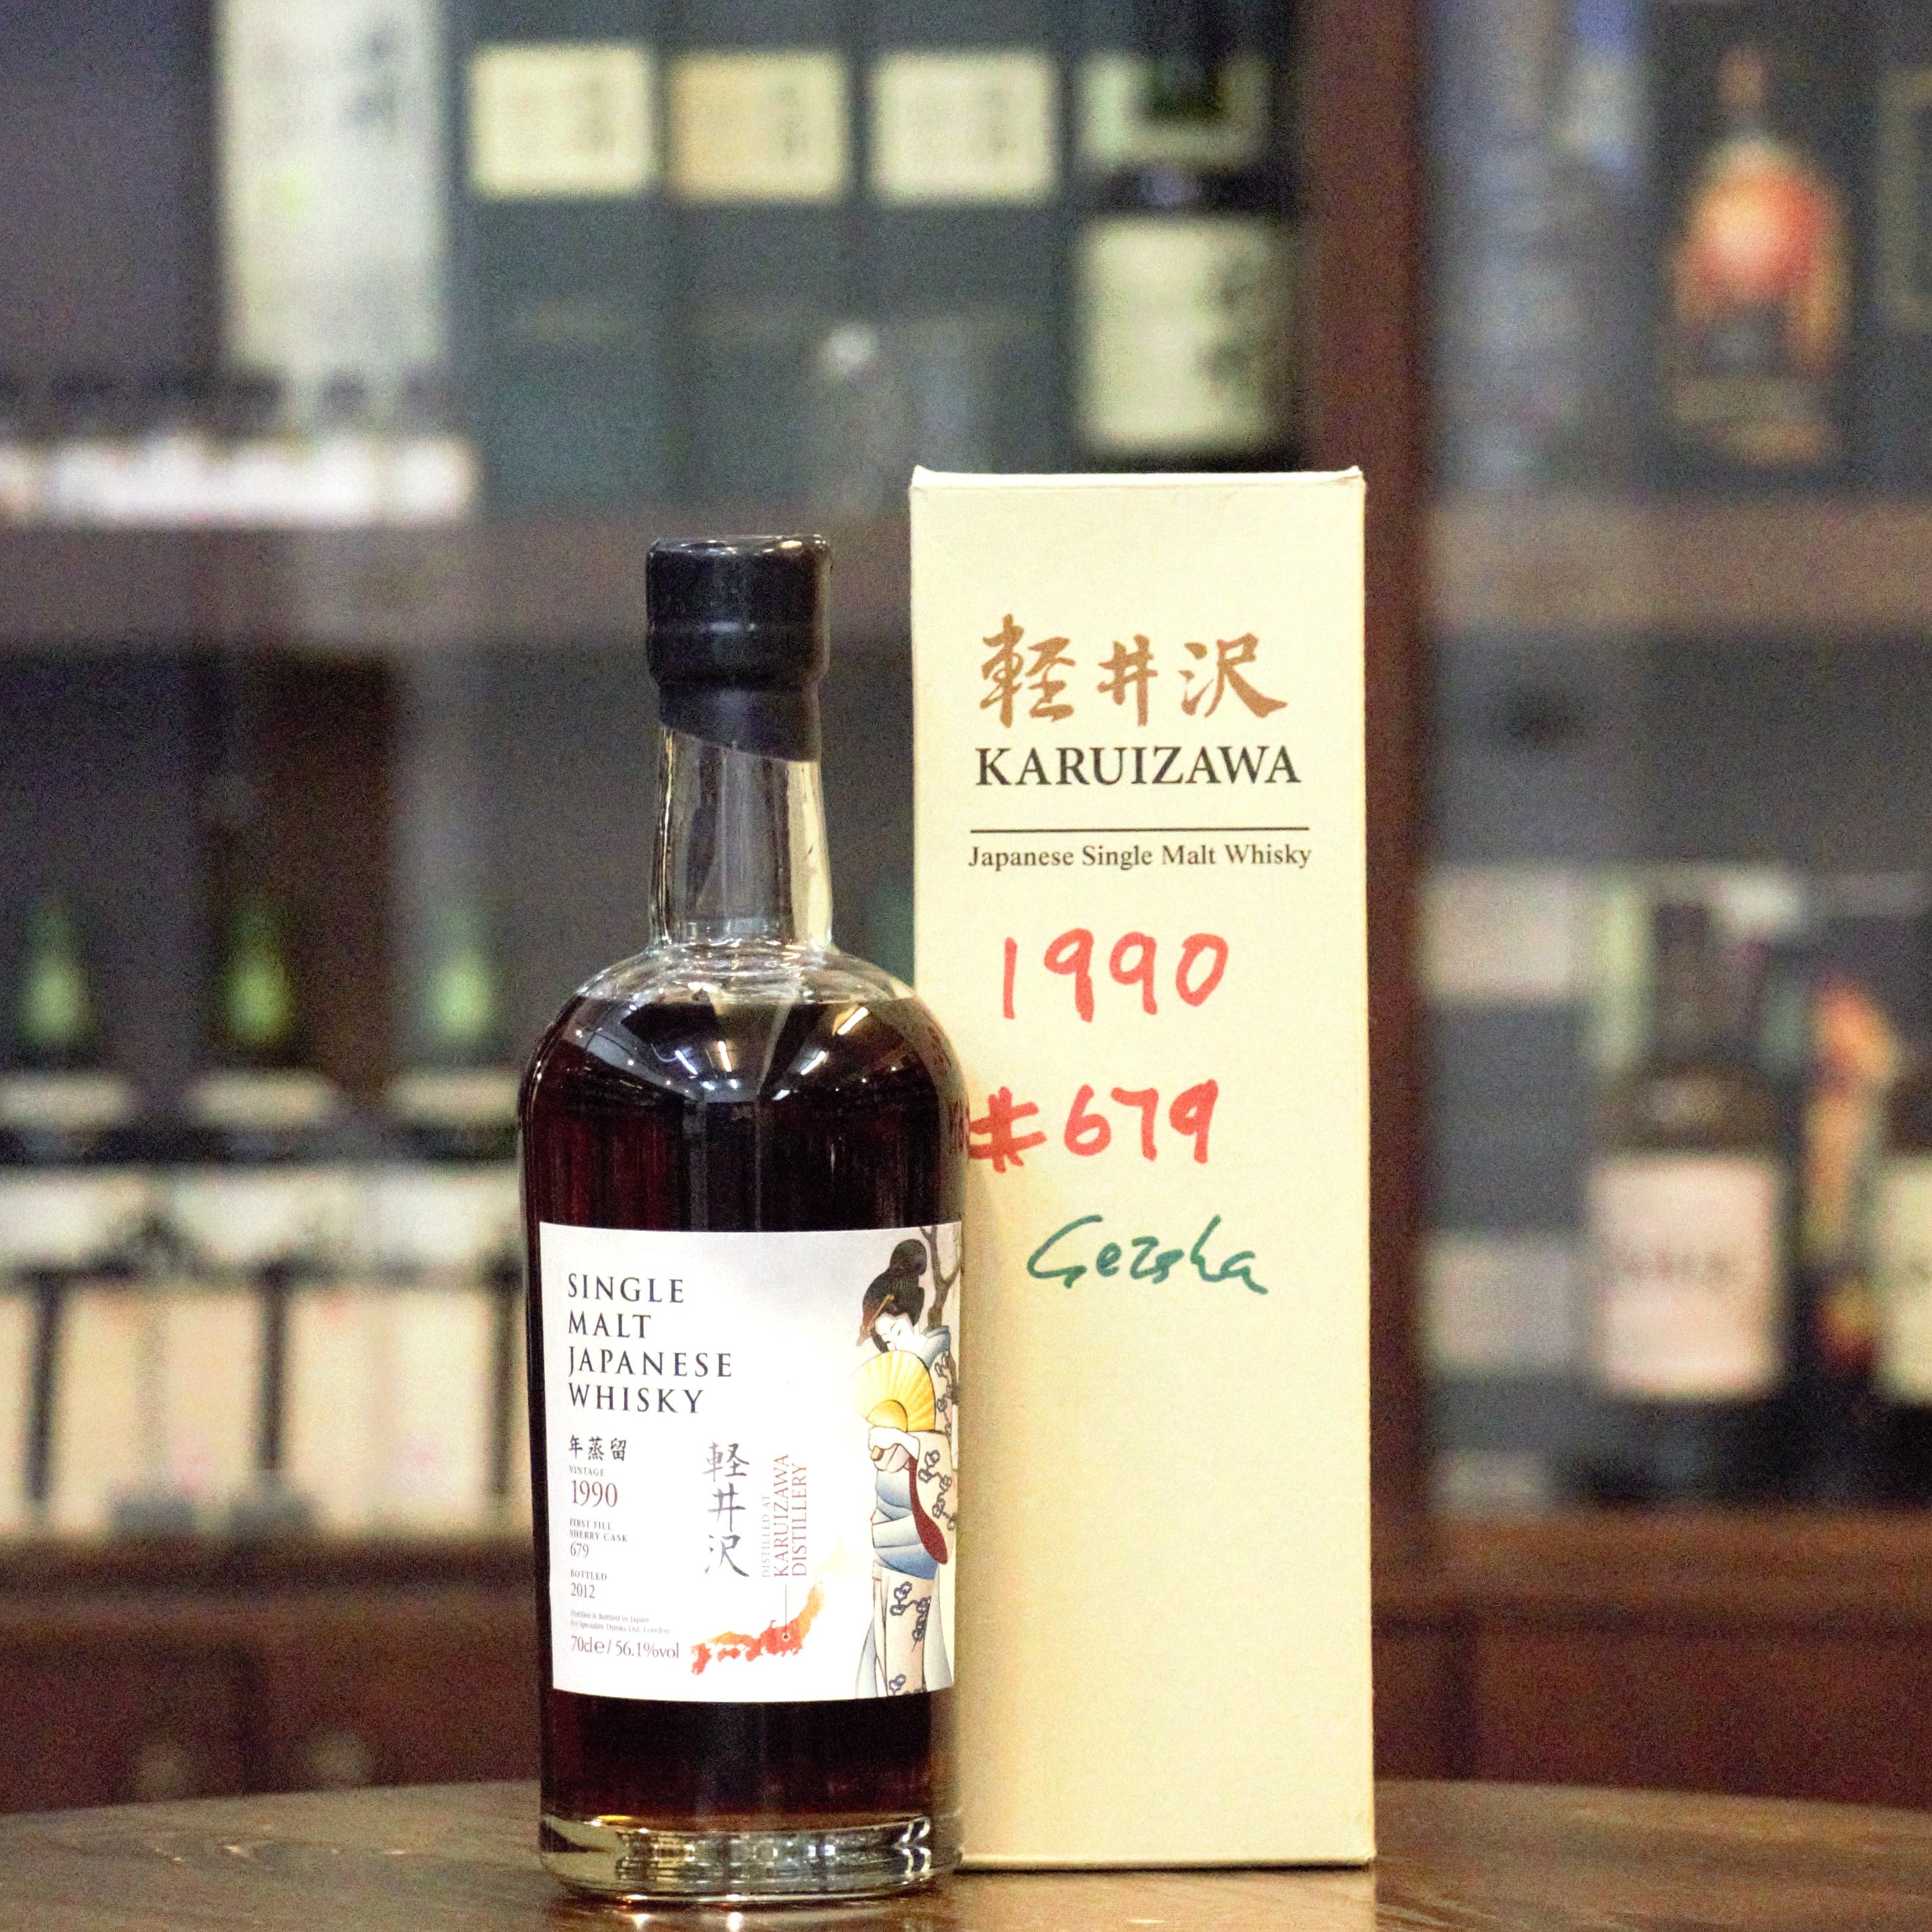 Karuizawa 1990 Vintage "Geisha Label" Single Cask #679 Single Malt Japanese Whisky